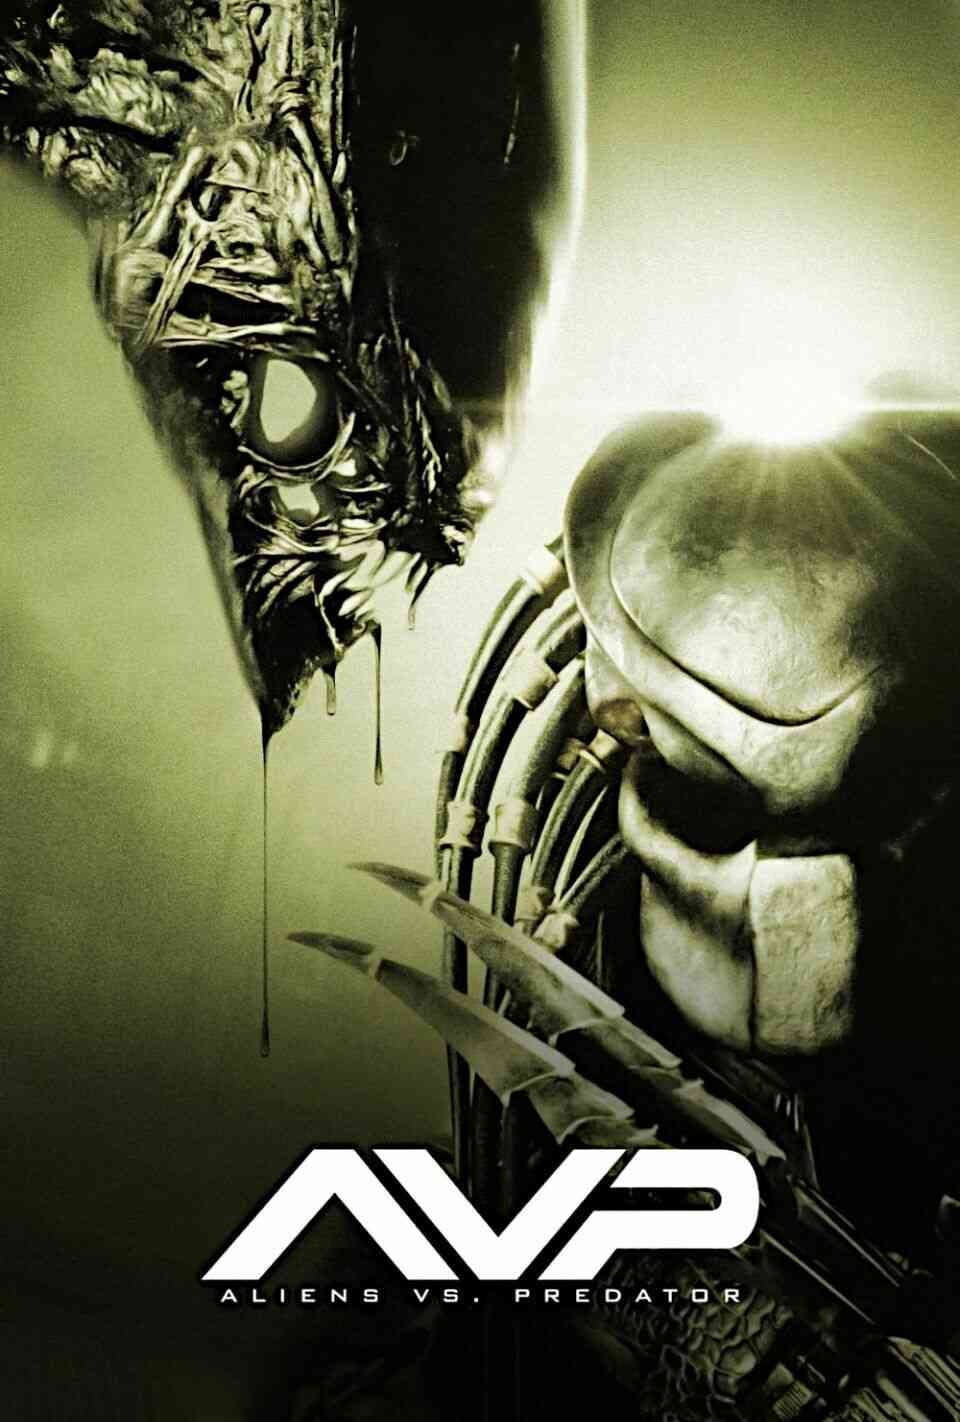 Read Alien vs. Predator screenplay (poster)